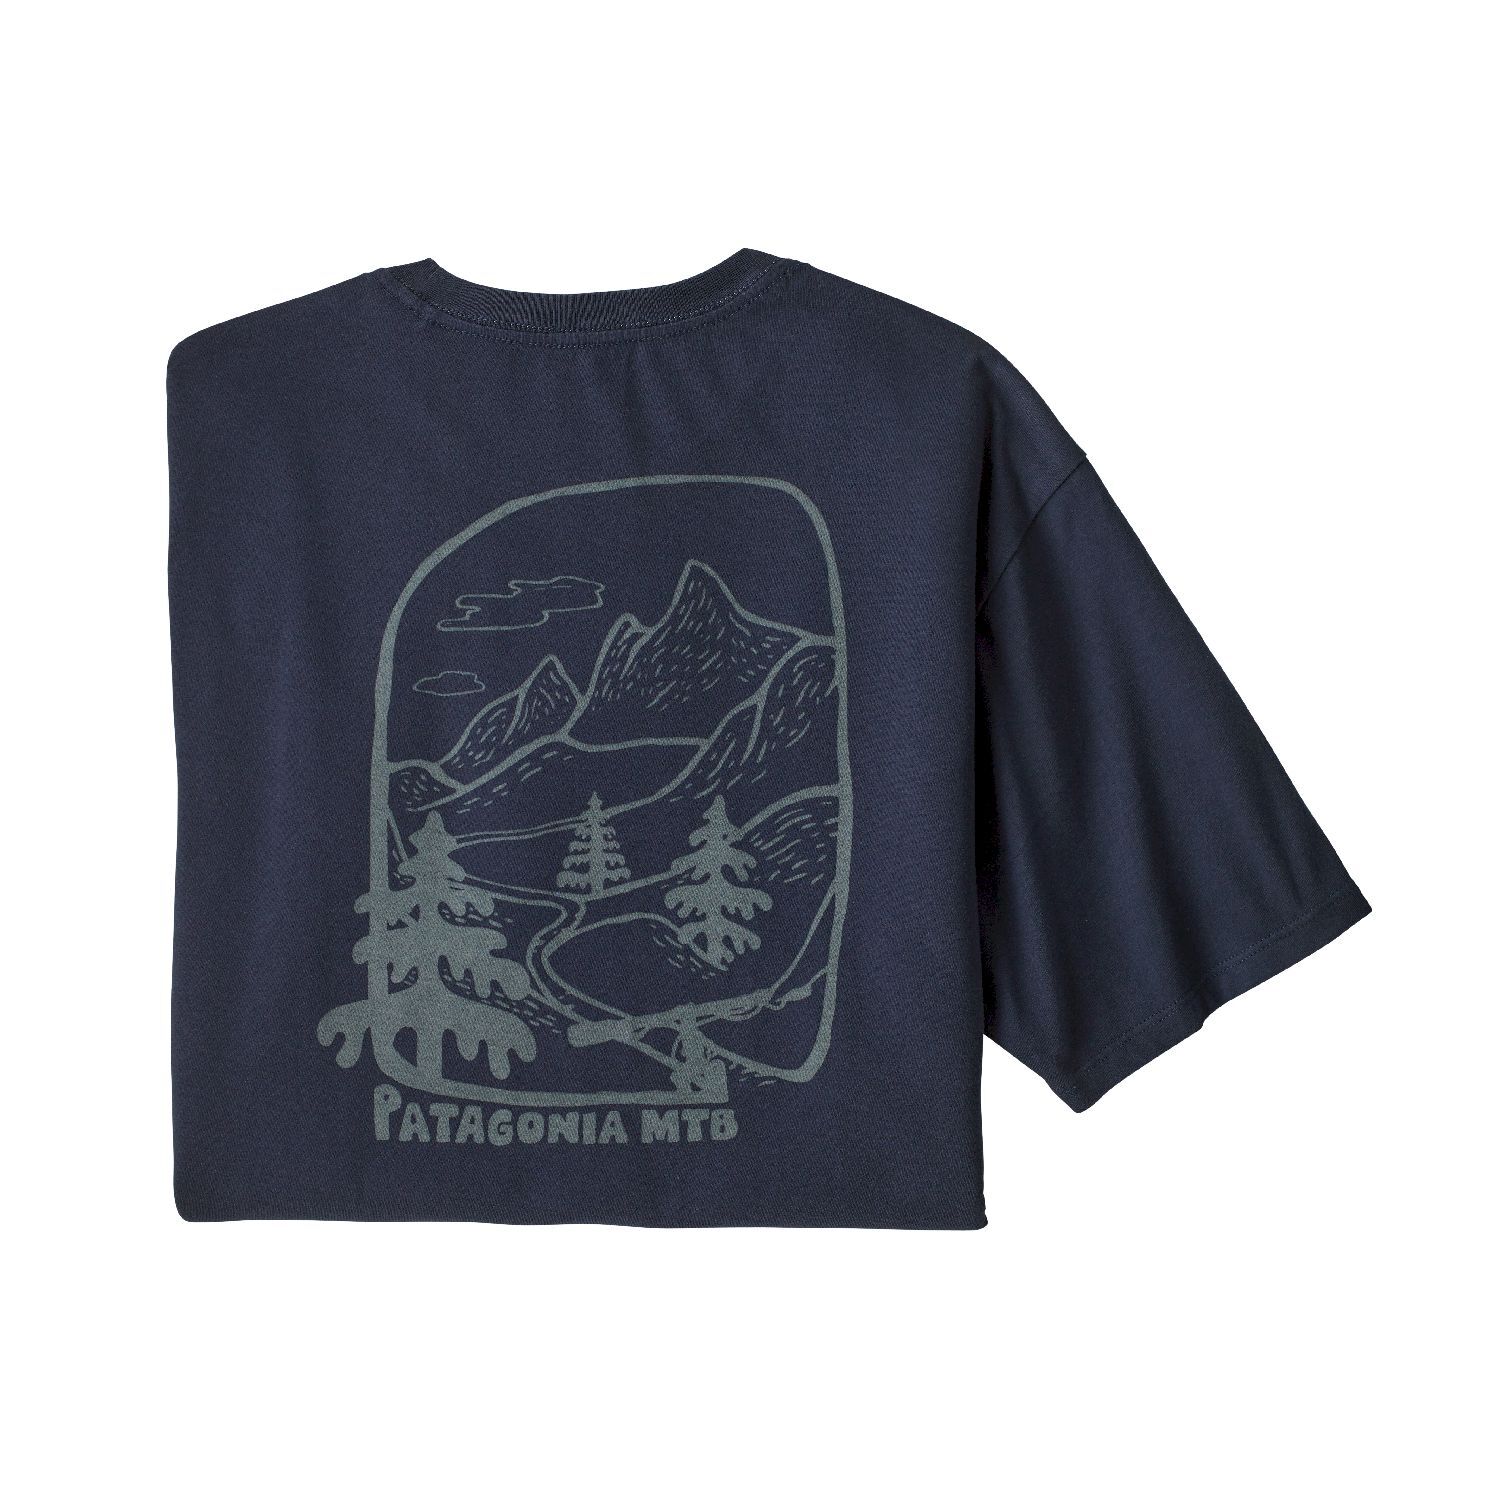 Patagonia Roam the Dirt Organic - T-shirt Herr